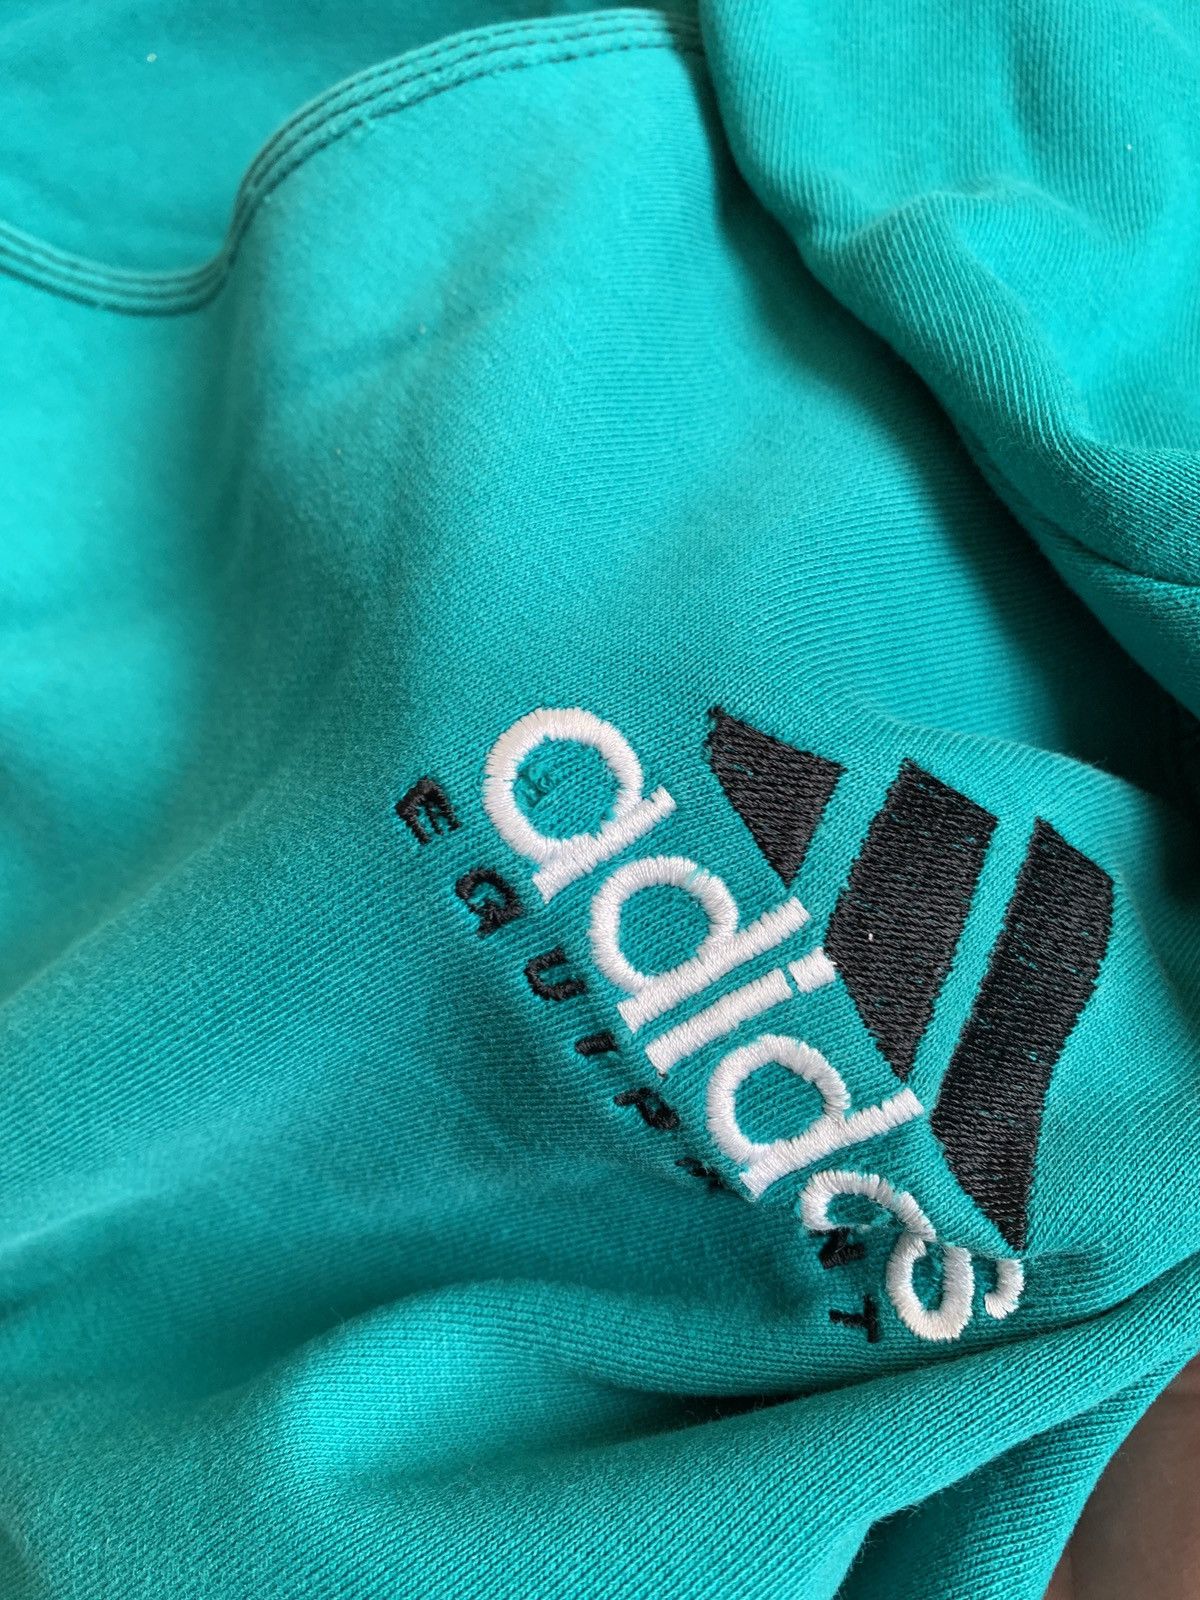 Adidas 90s Adidas Equipment Rare Vintage 1/3 Zip Sweatshirt Anorak Size US M / EU 48-50 / 2 - 15 Preview